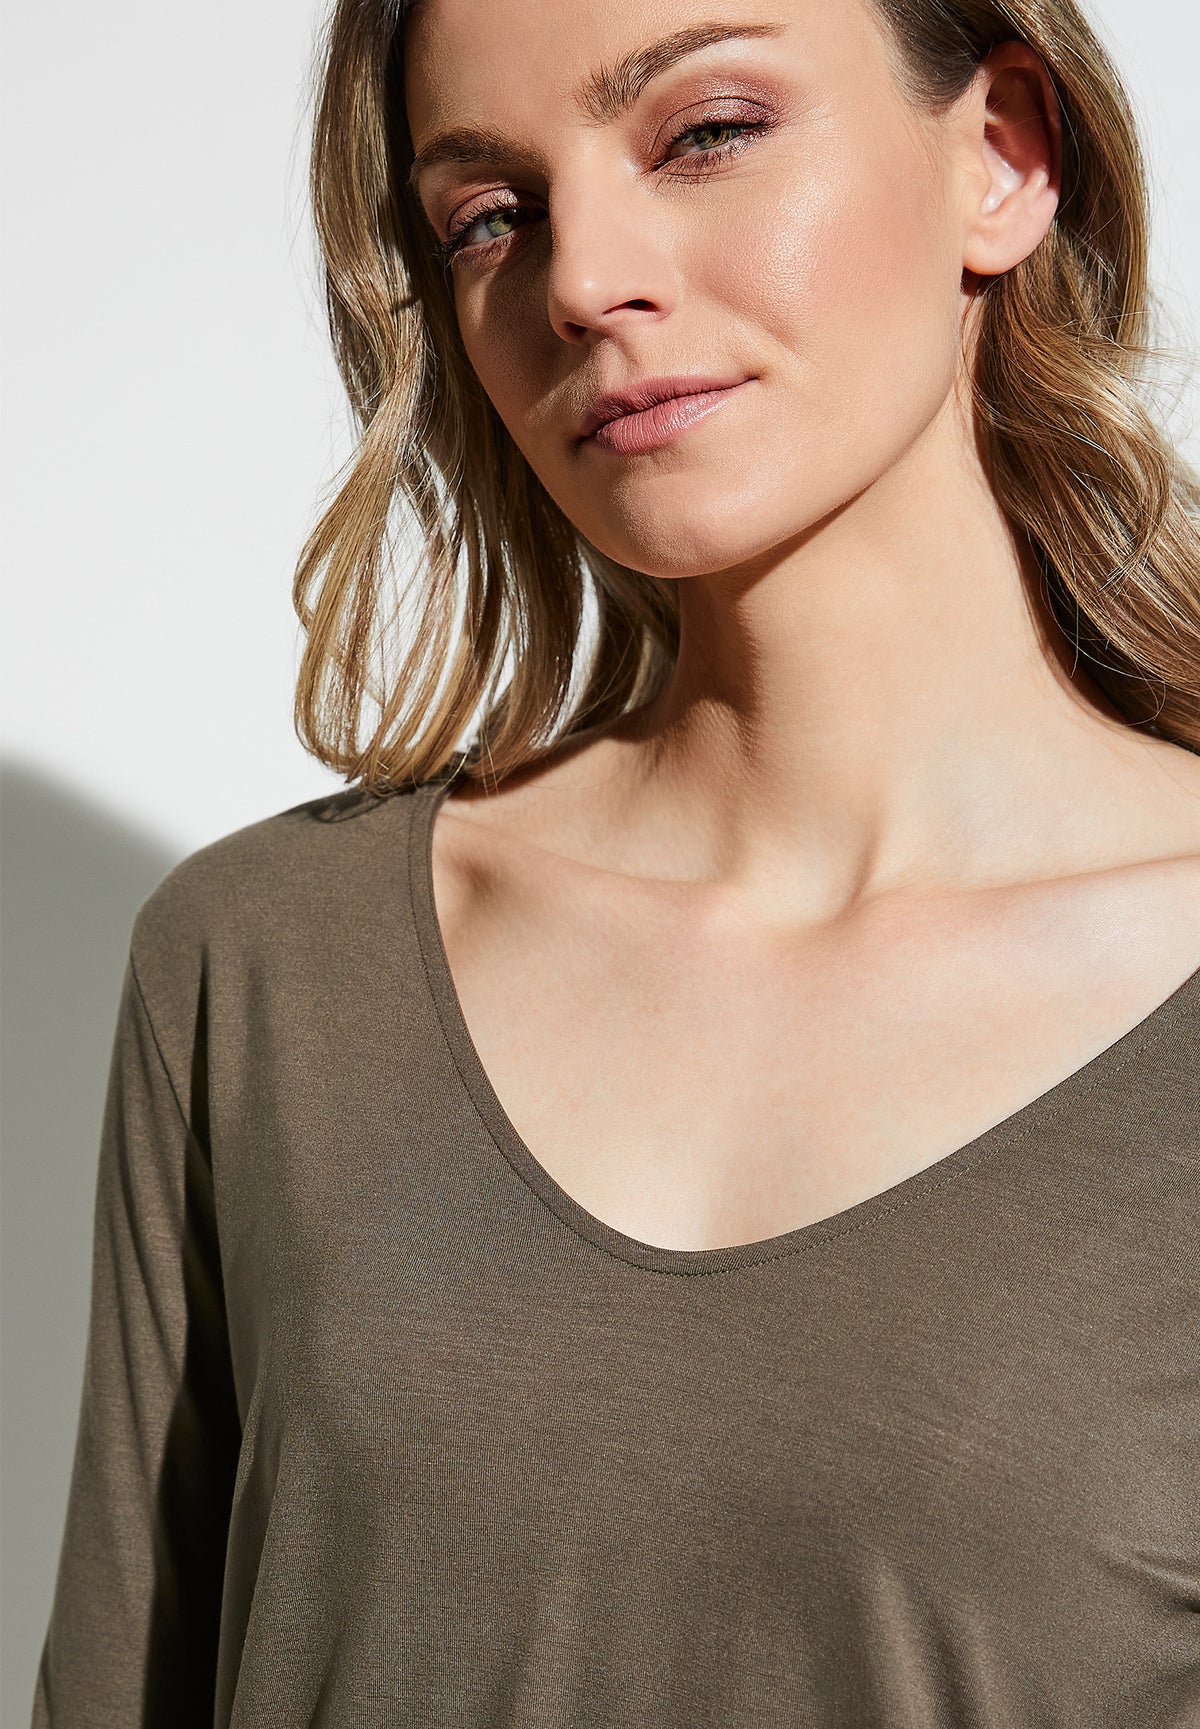 Pureness | T-Shirt Long Sleeve V-Neck - major brown